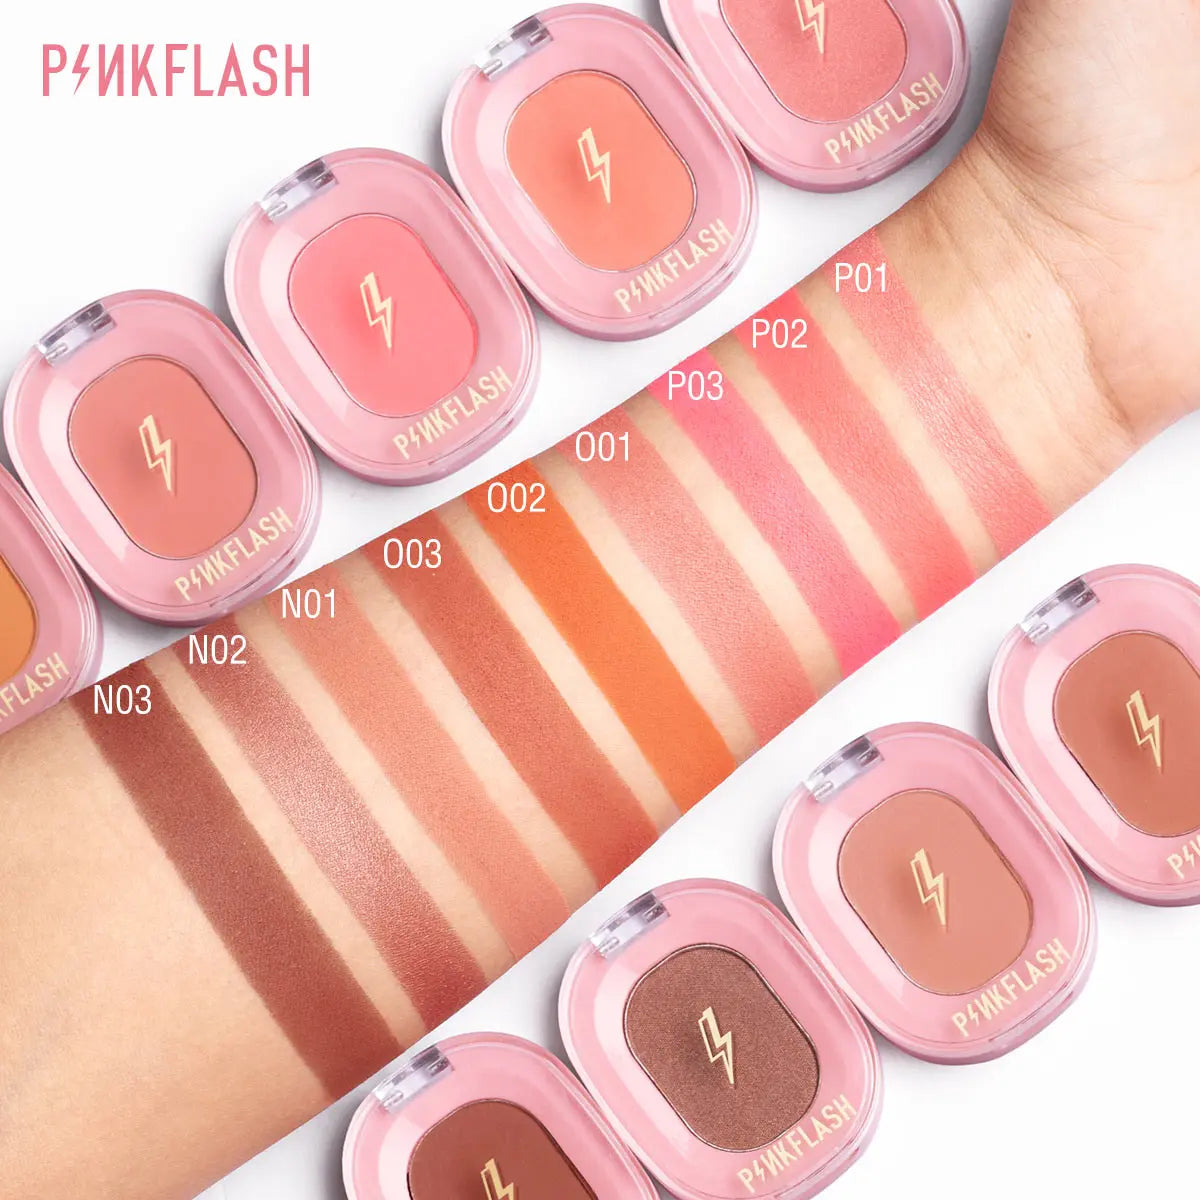 PINKFLASH 11 Colors Peach Blush Palette Oil-control Minerals Pigment Face Cheek Blusher Powder Contour Makeup Women Cosmetics